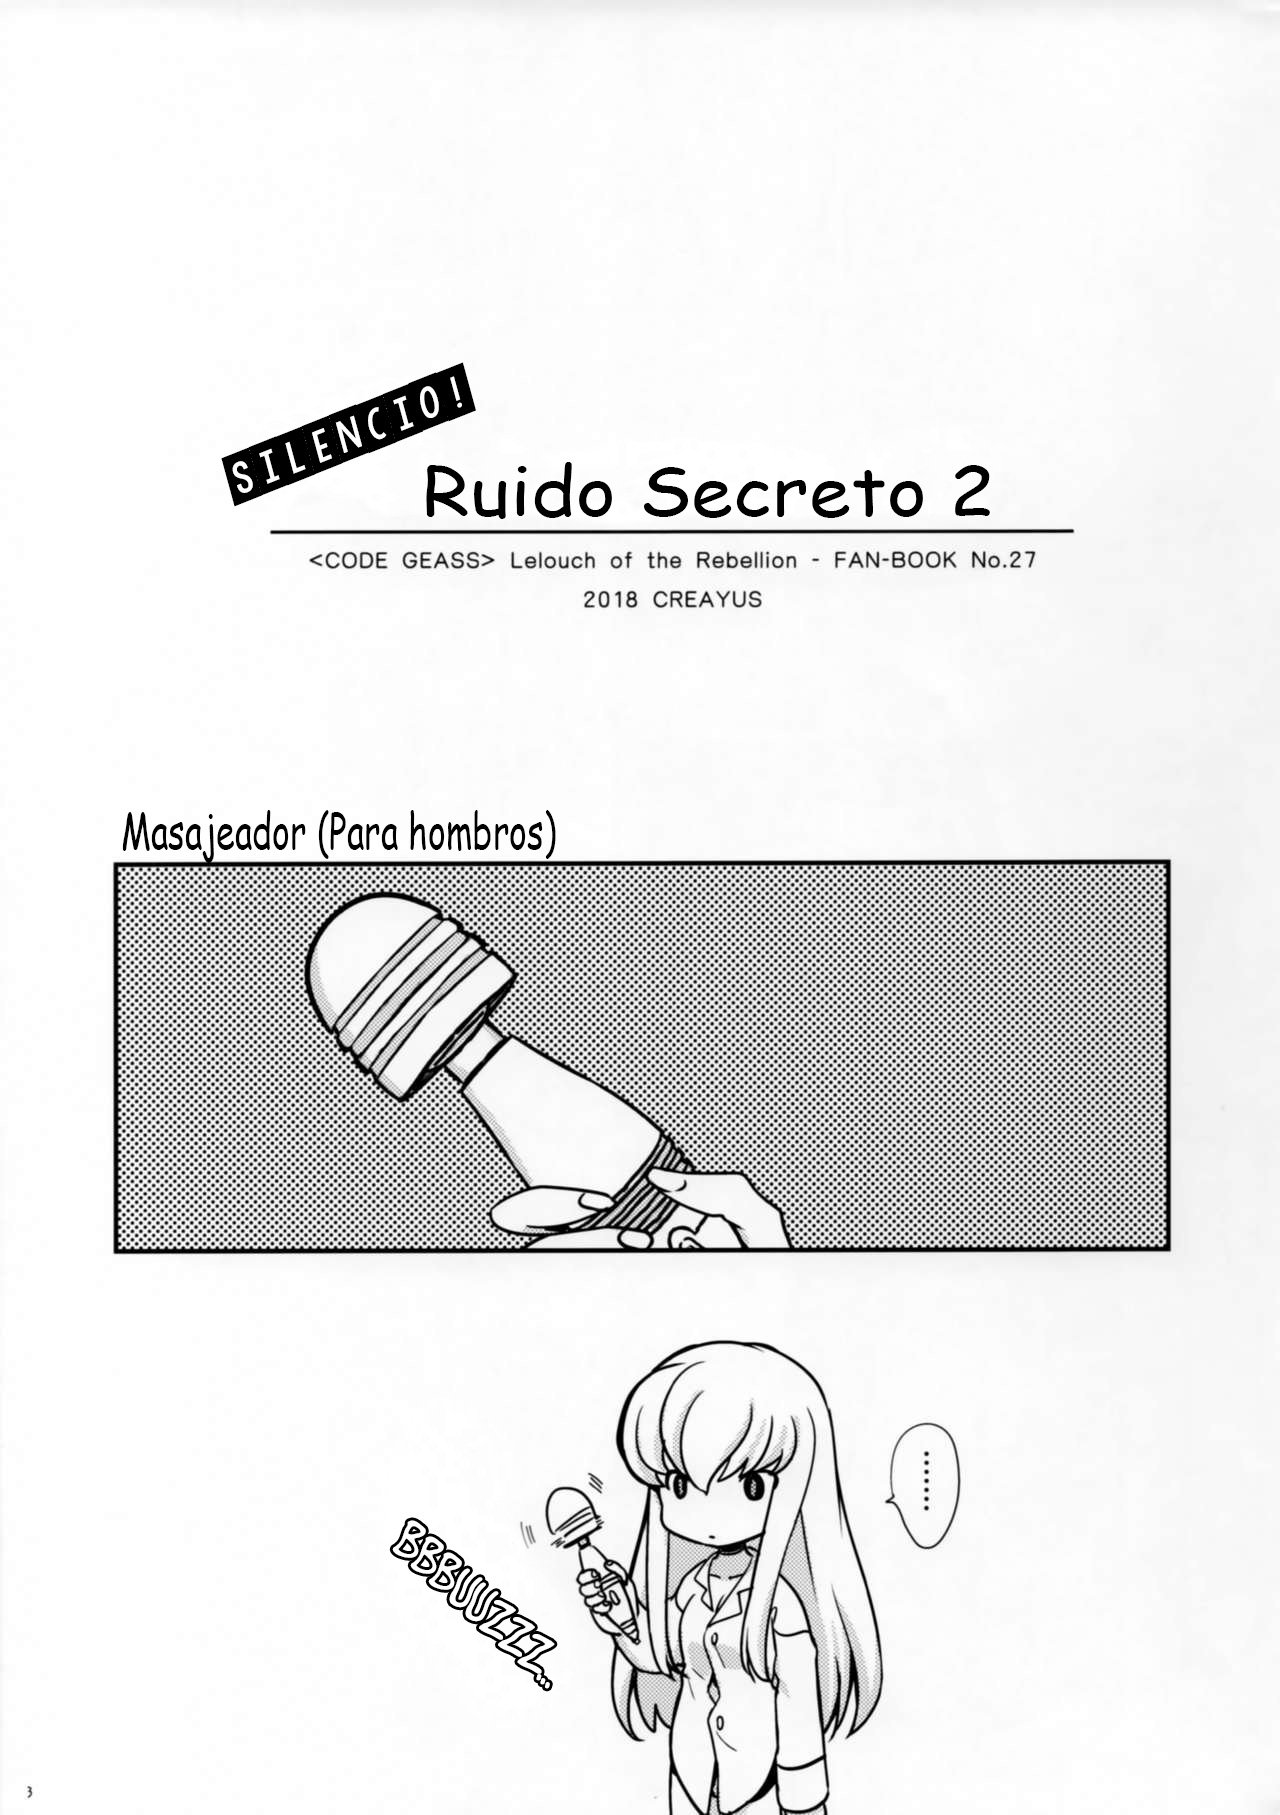 Silencio! Ruido Secreto 2 (Hush! Secret Noise 2) - 2